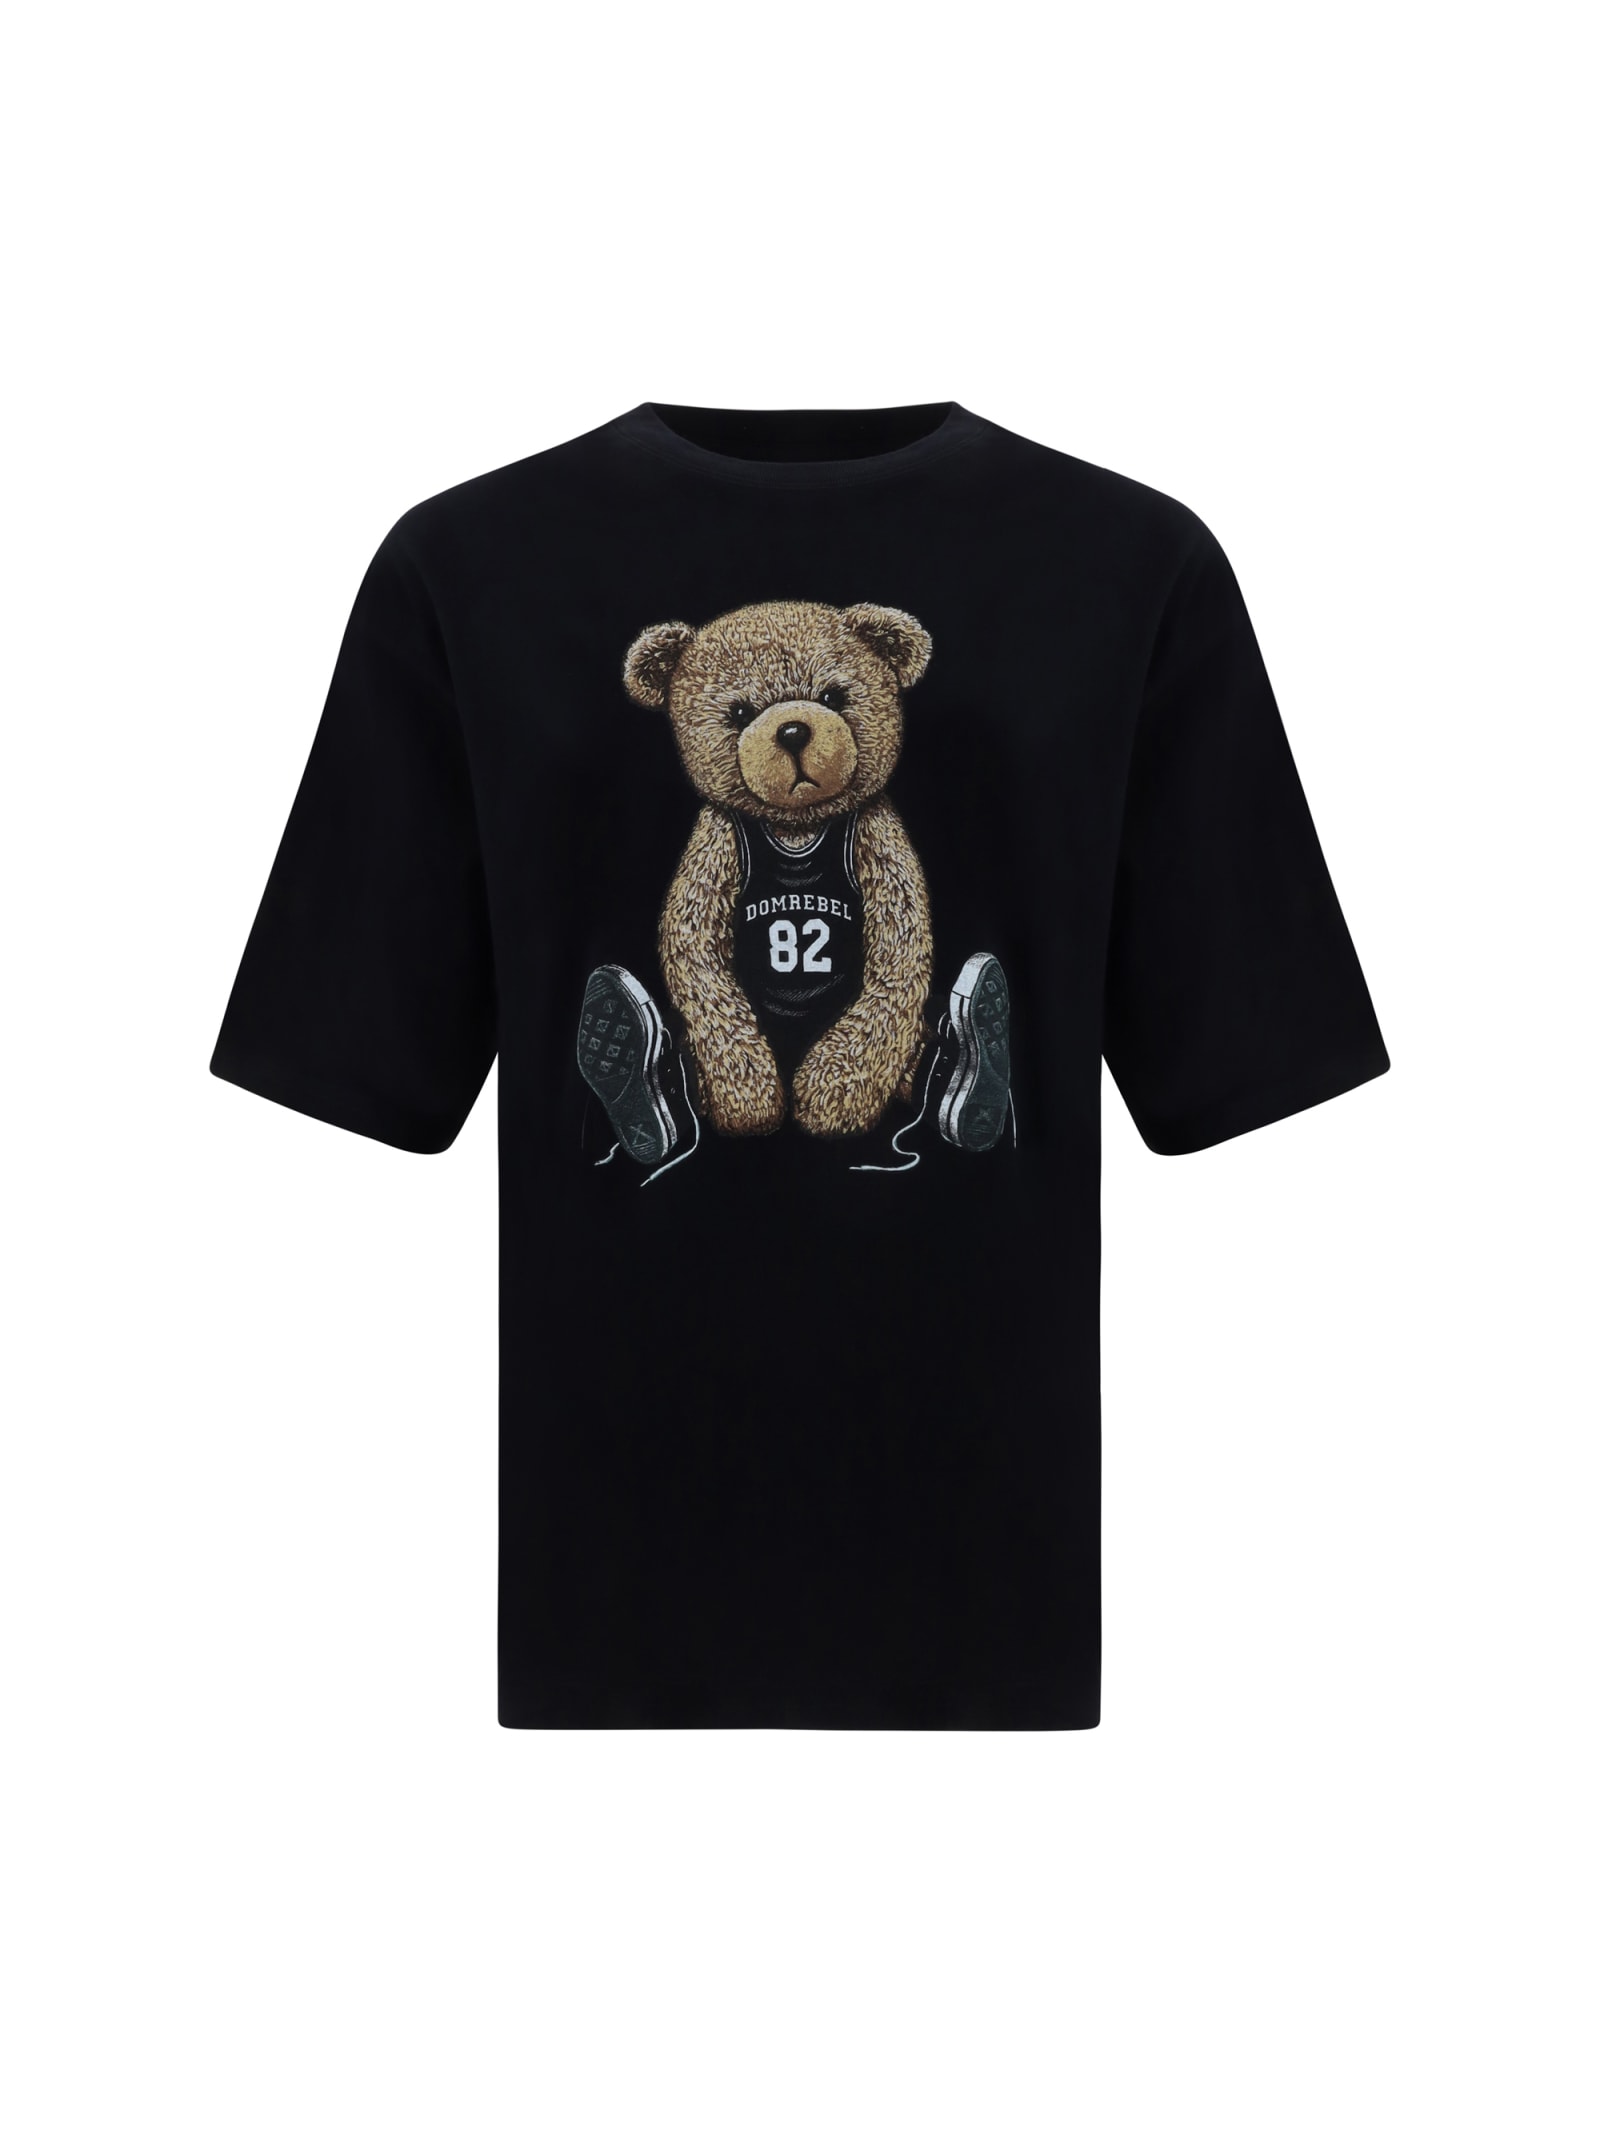 DOM REBEL DOMREBEL Basketball Teddy Bear Sweatshirt - Black for Men